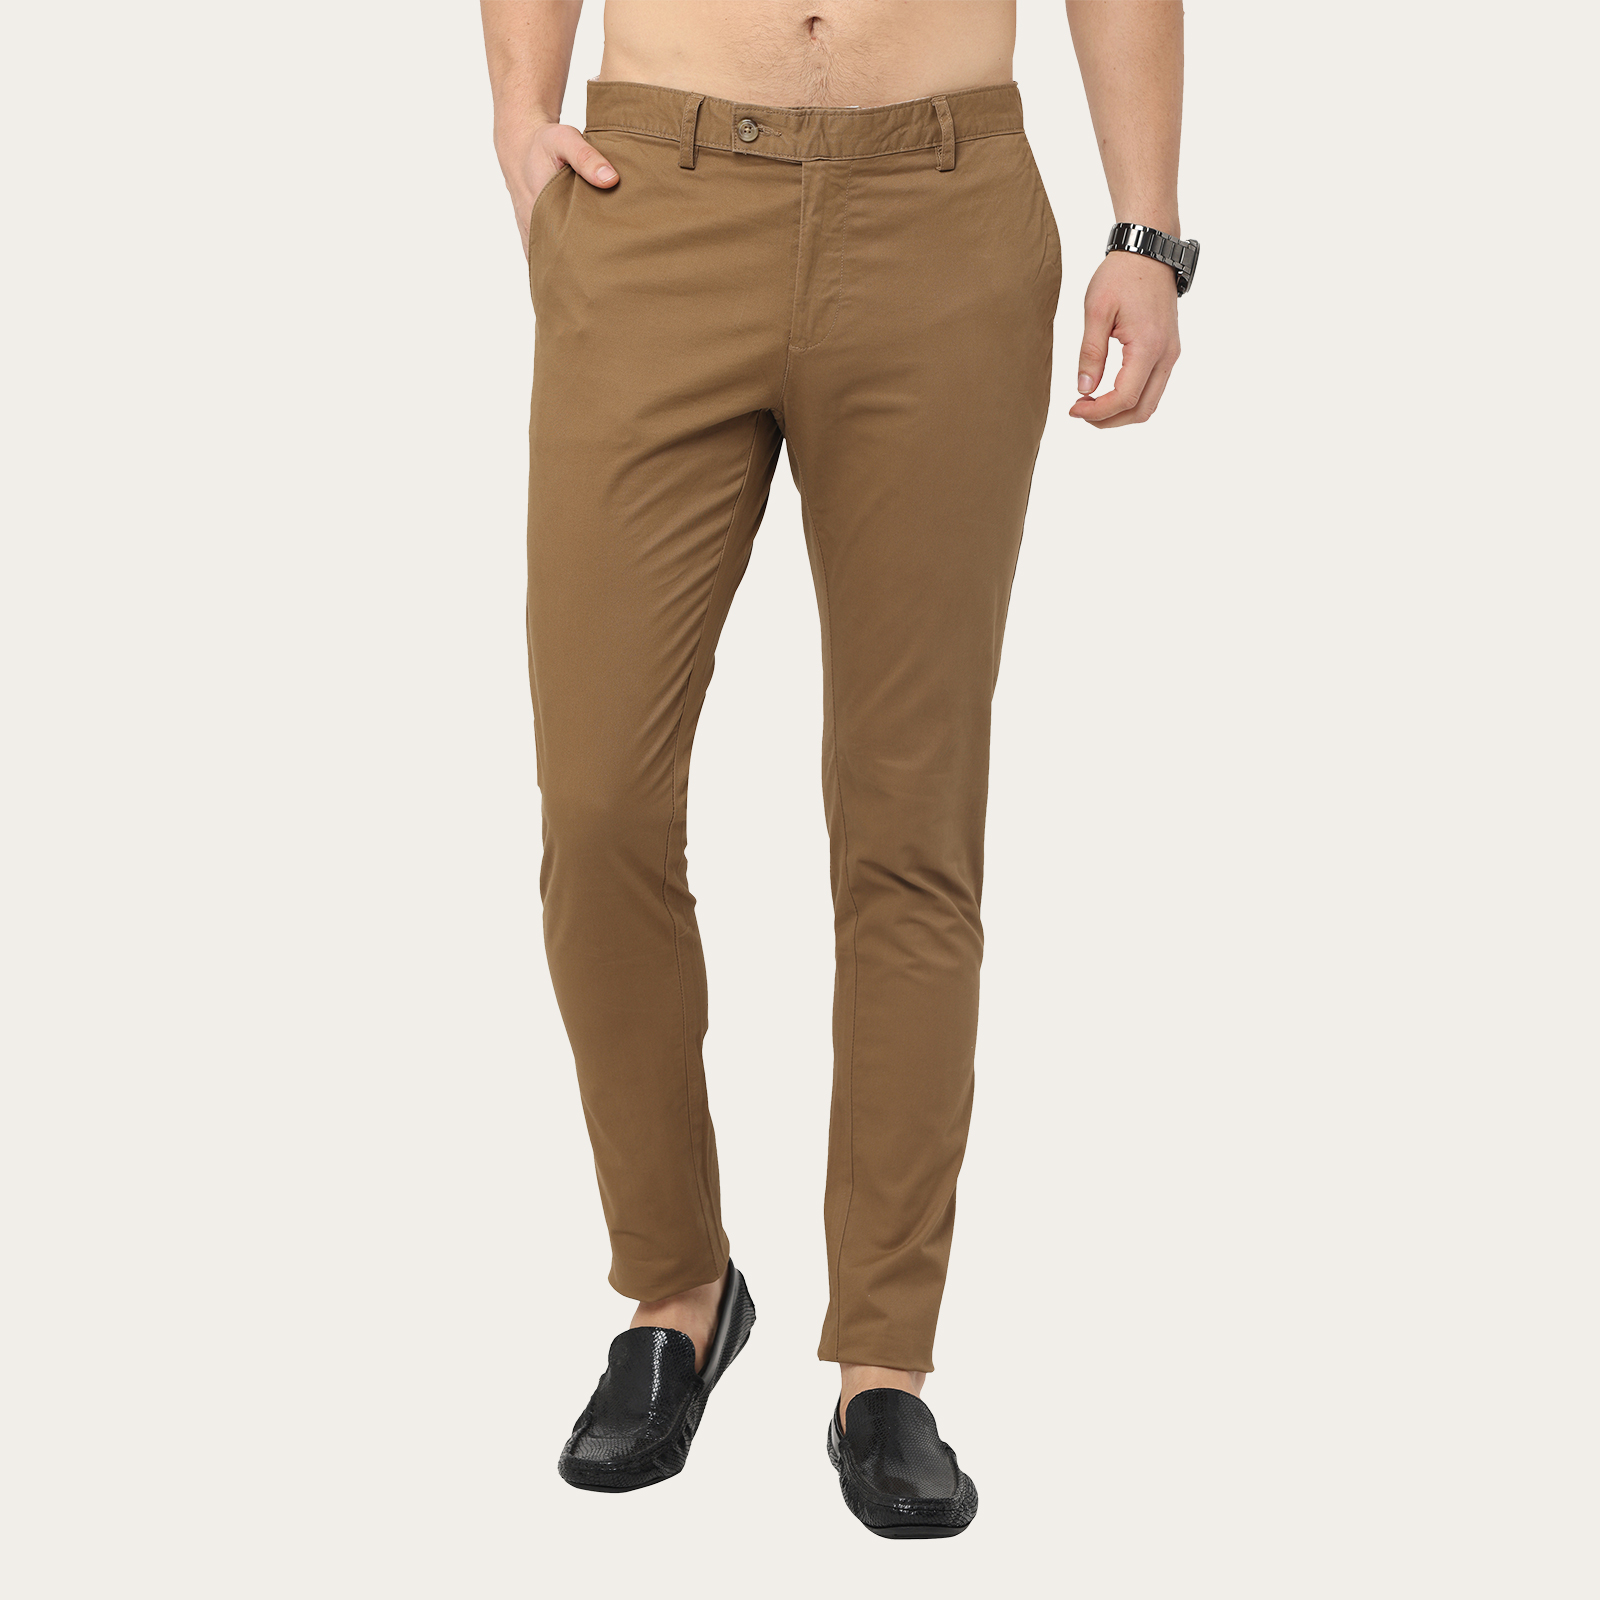 Men Breathable Trousers Pants SG-520 Brown